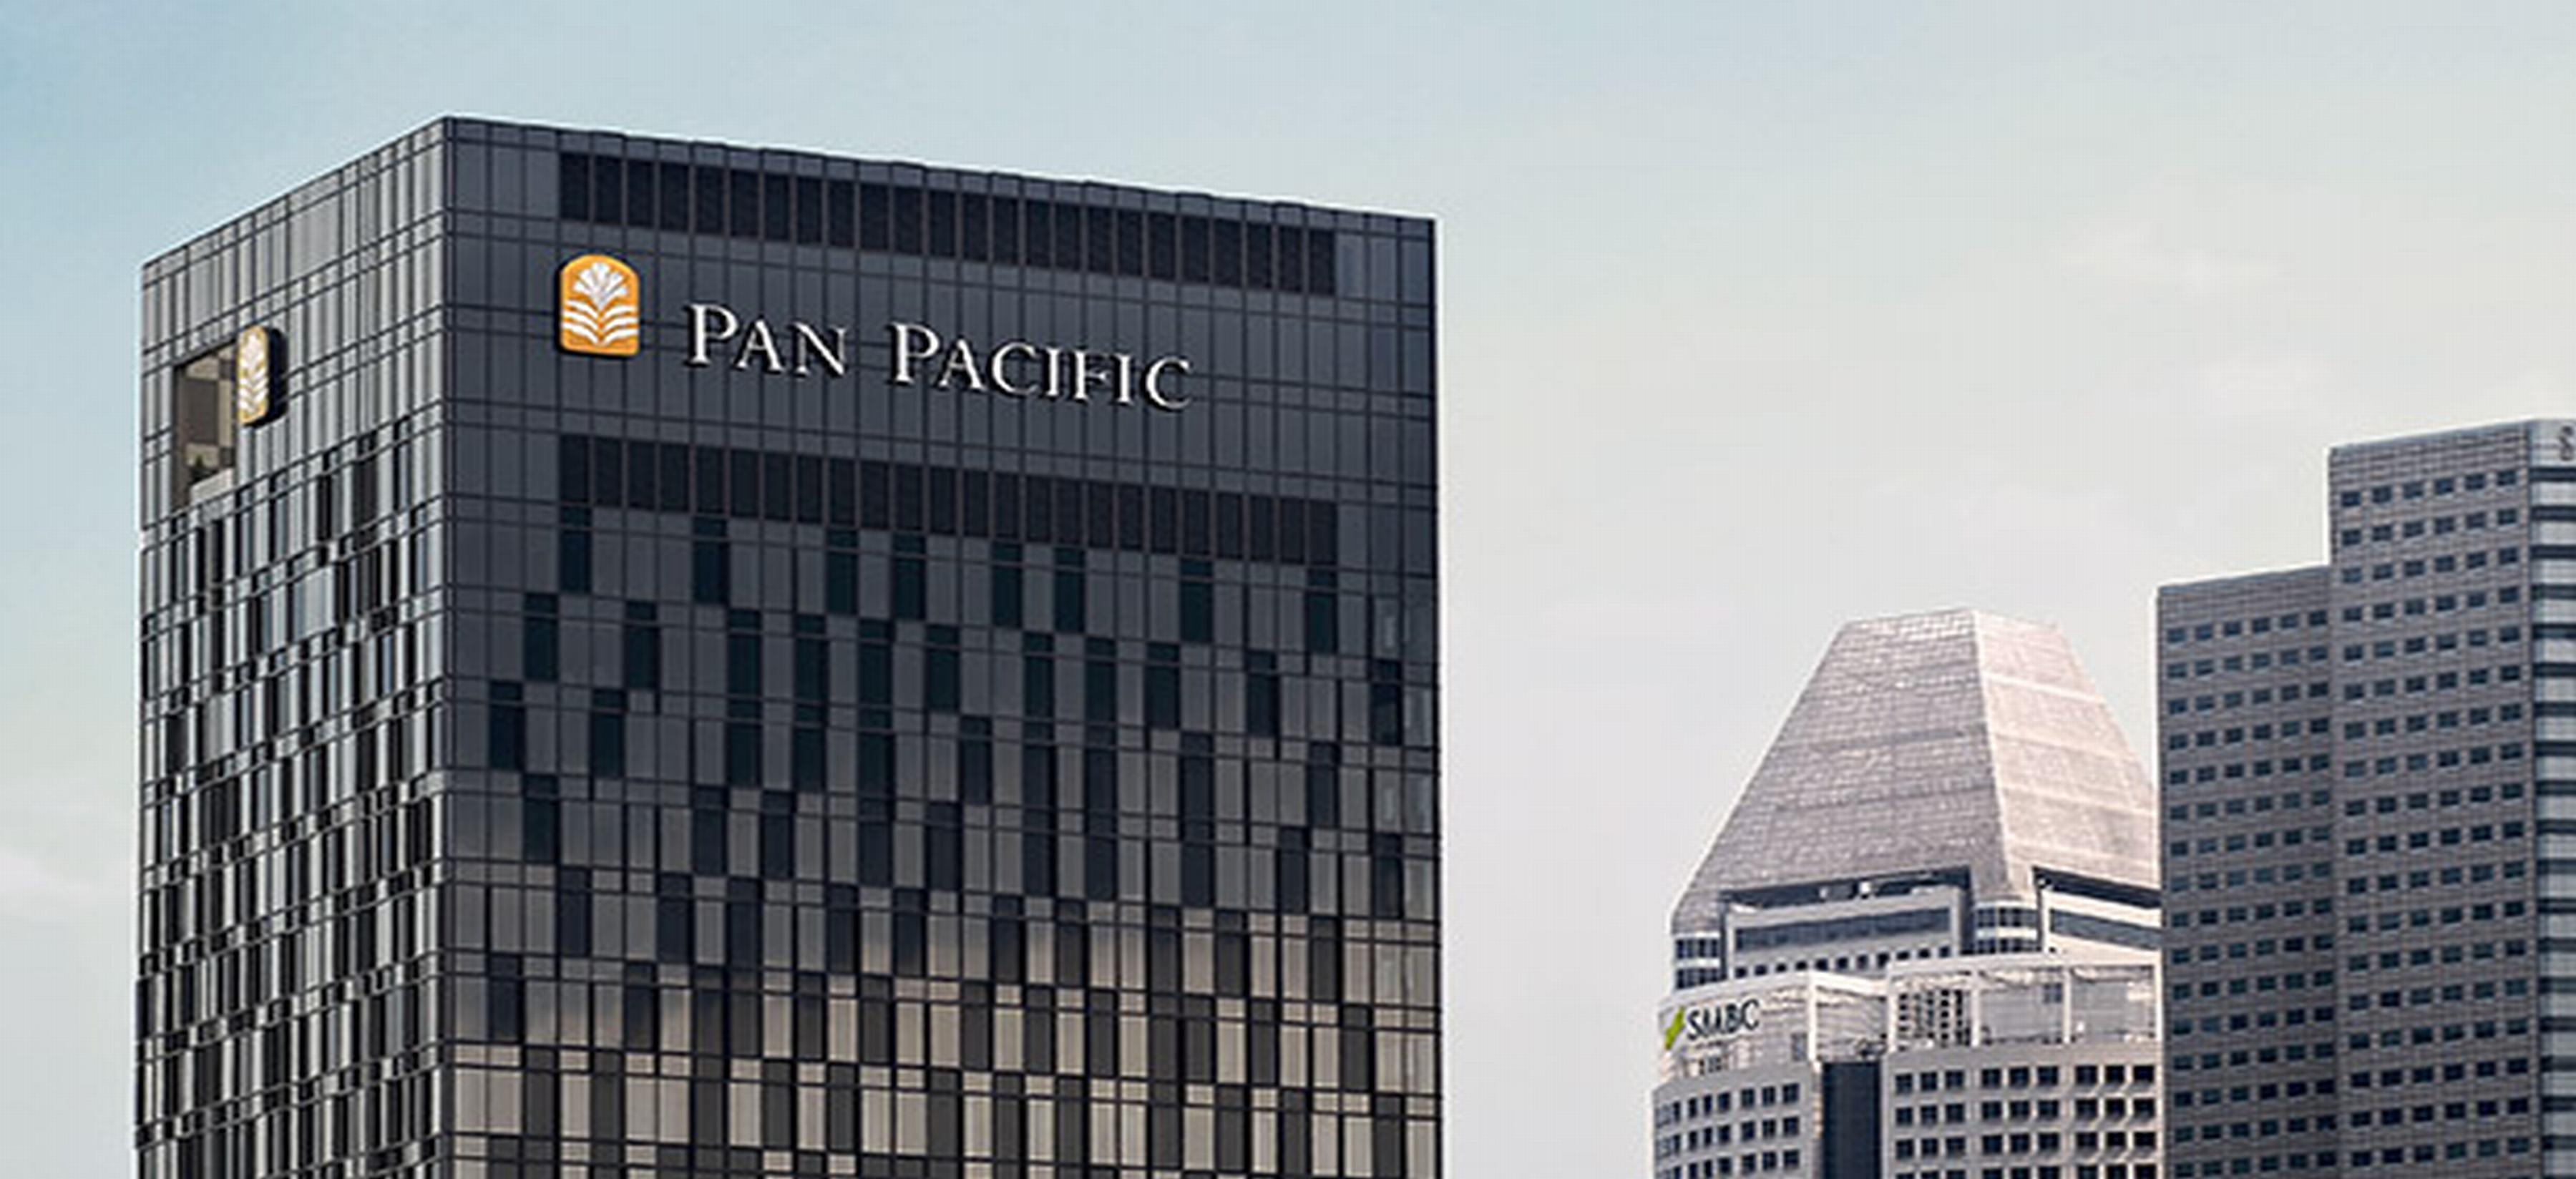 Pan Pacific Serviced Suites Beach Road, Singapore Exterior foto